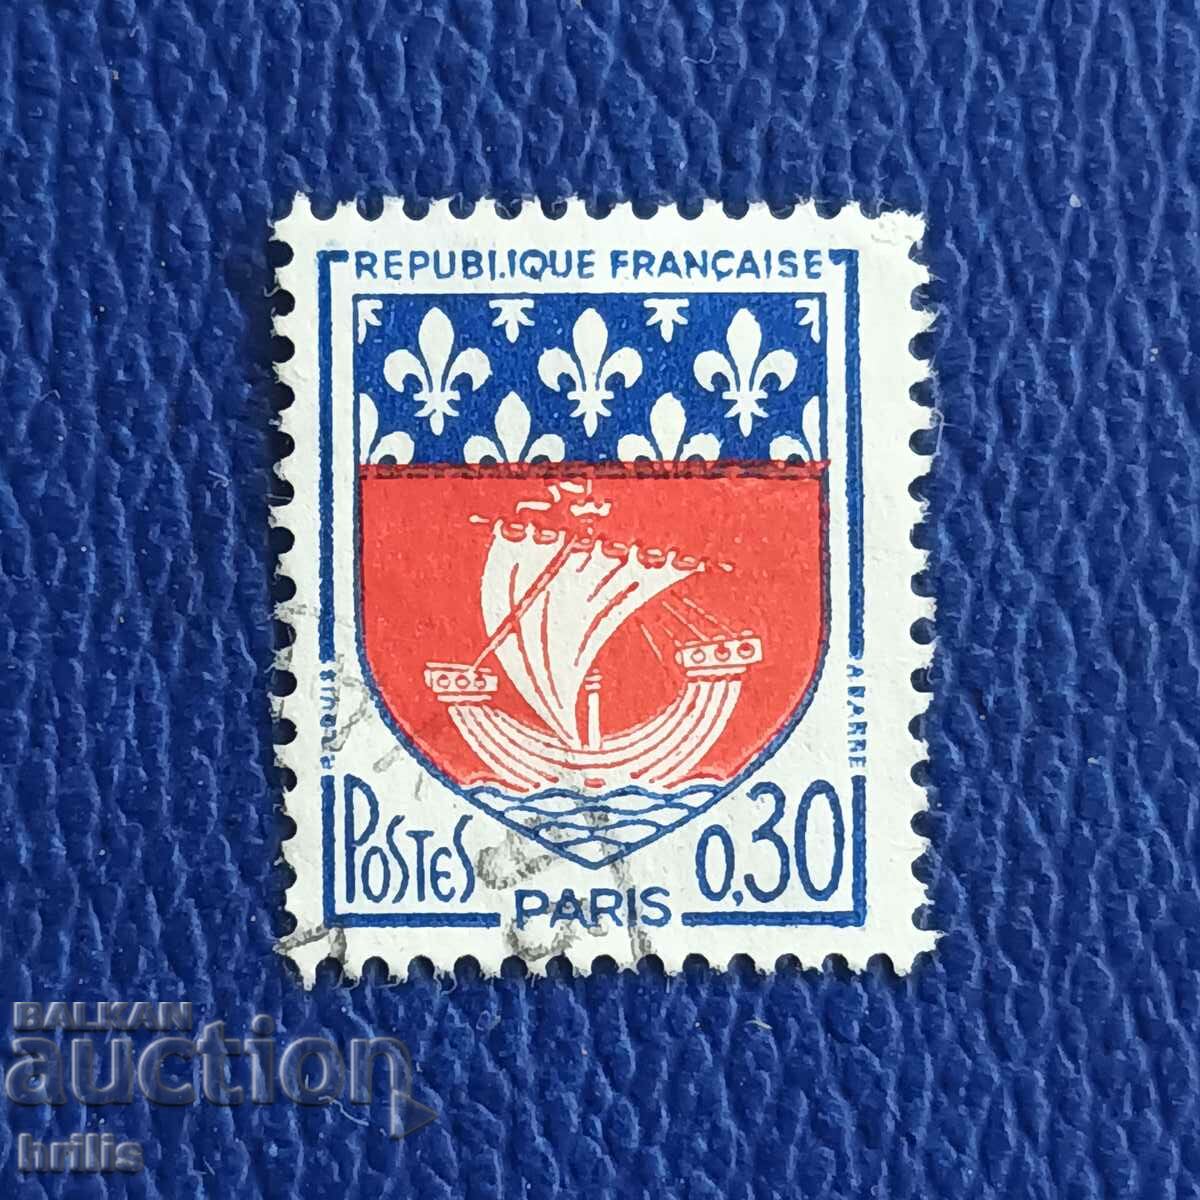 FRANTA 1960 - PARIS